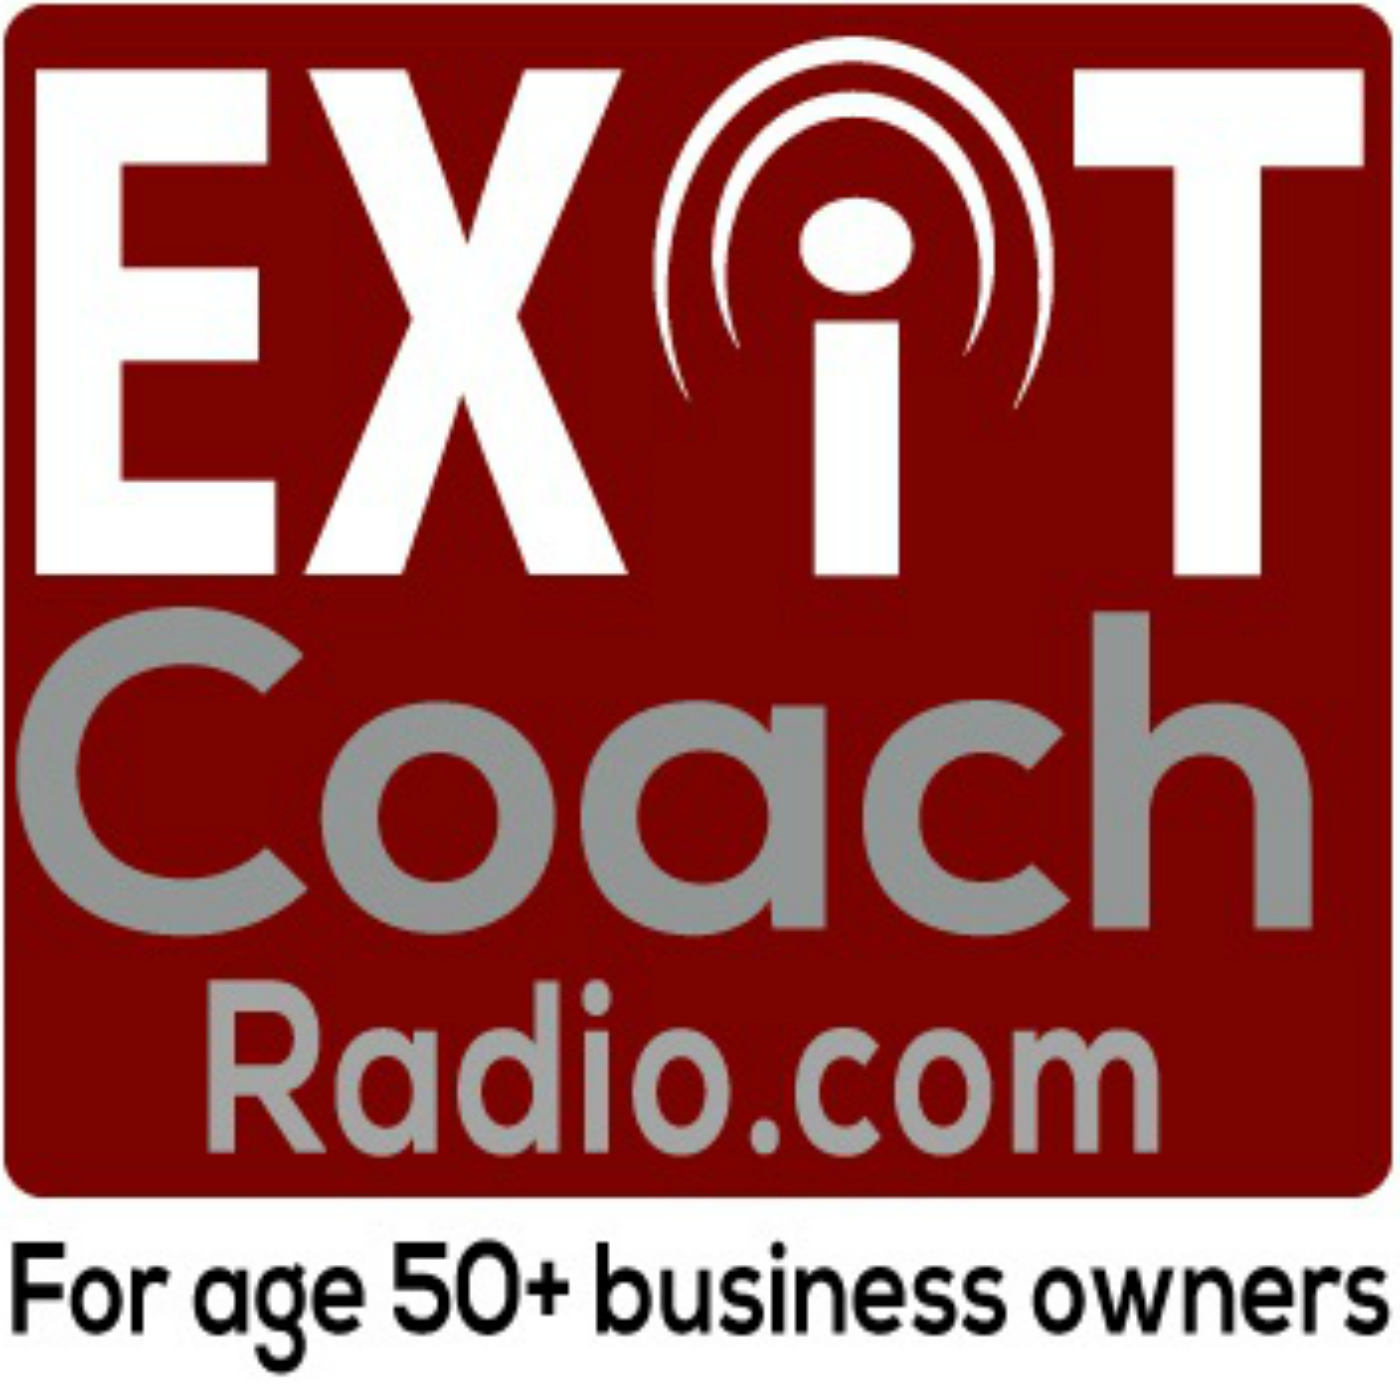 Exit Coach 20M Interview: Founding a Business with an Exit Plan - Rhett Power